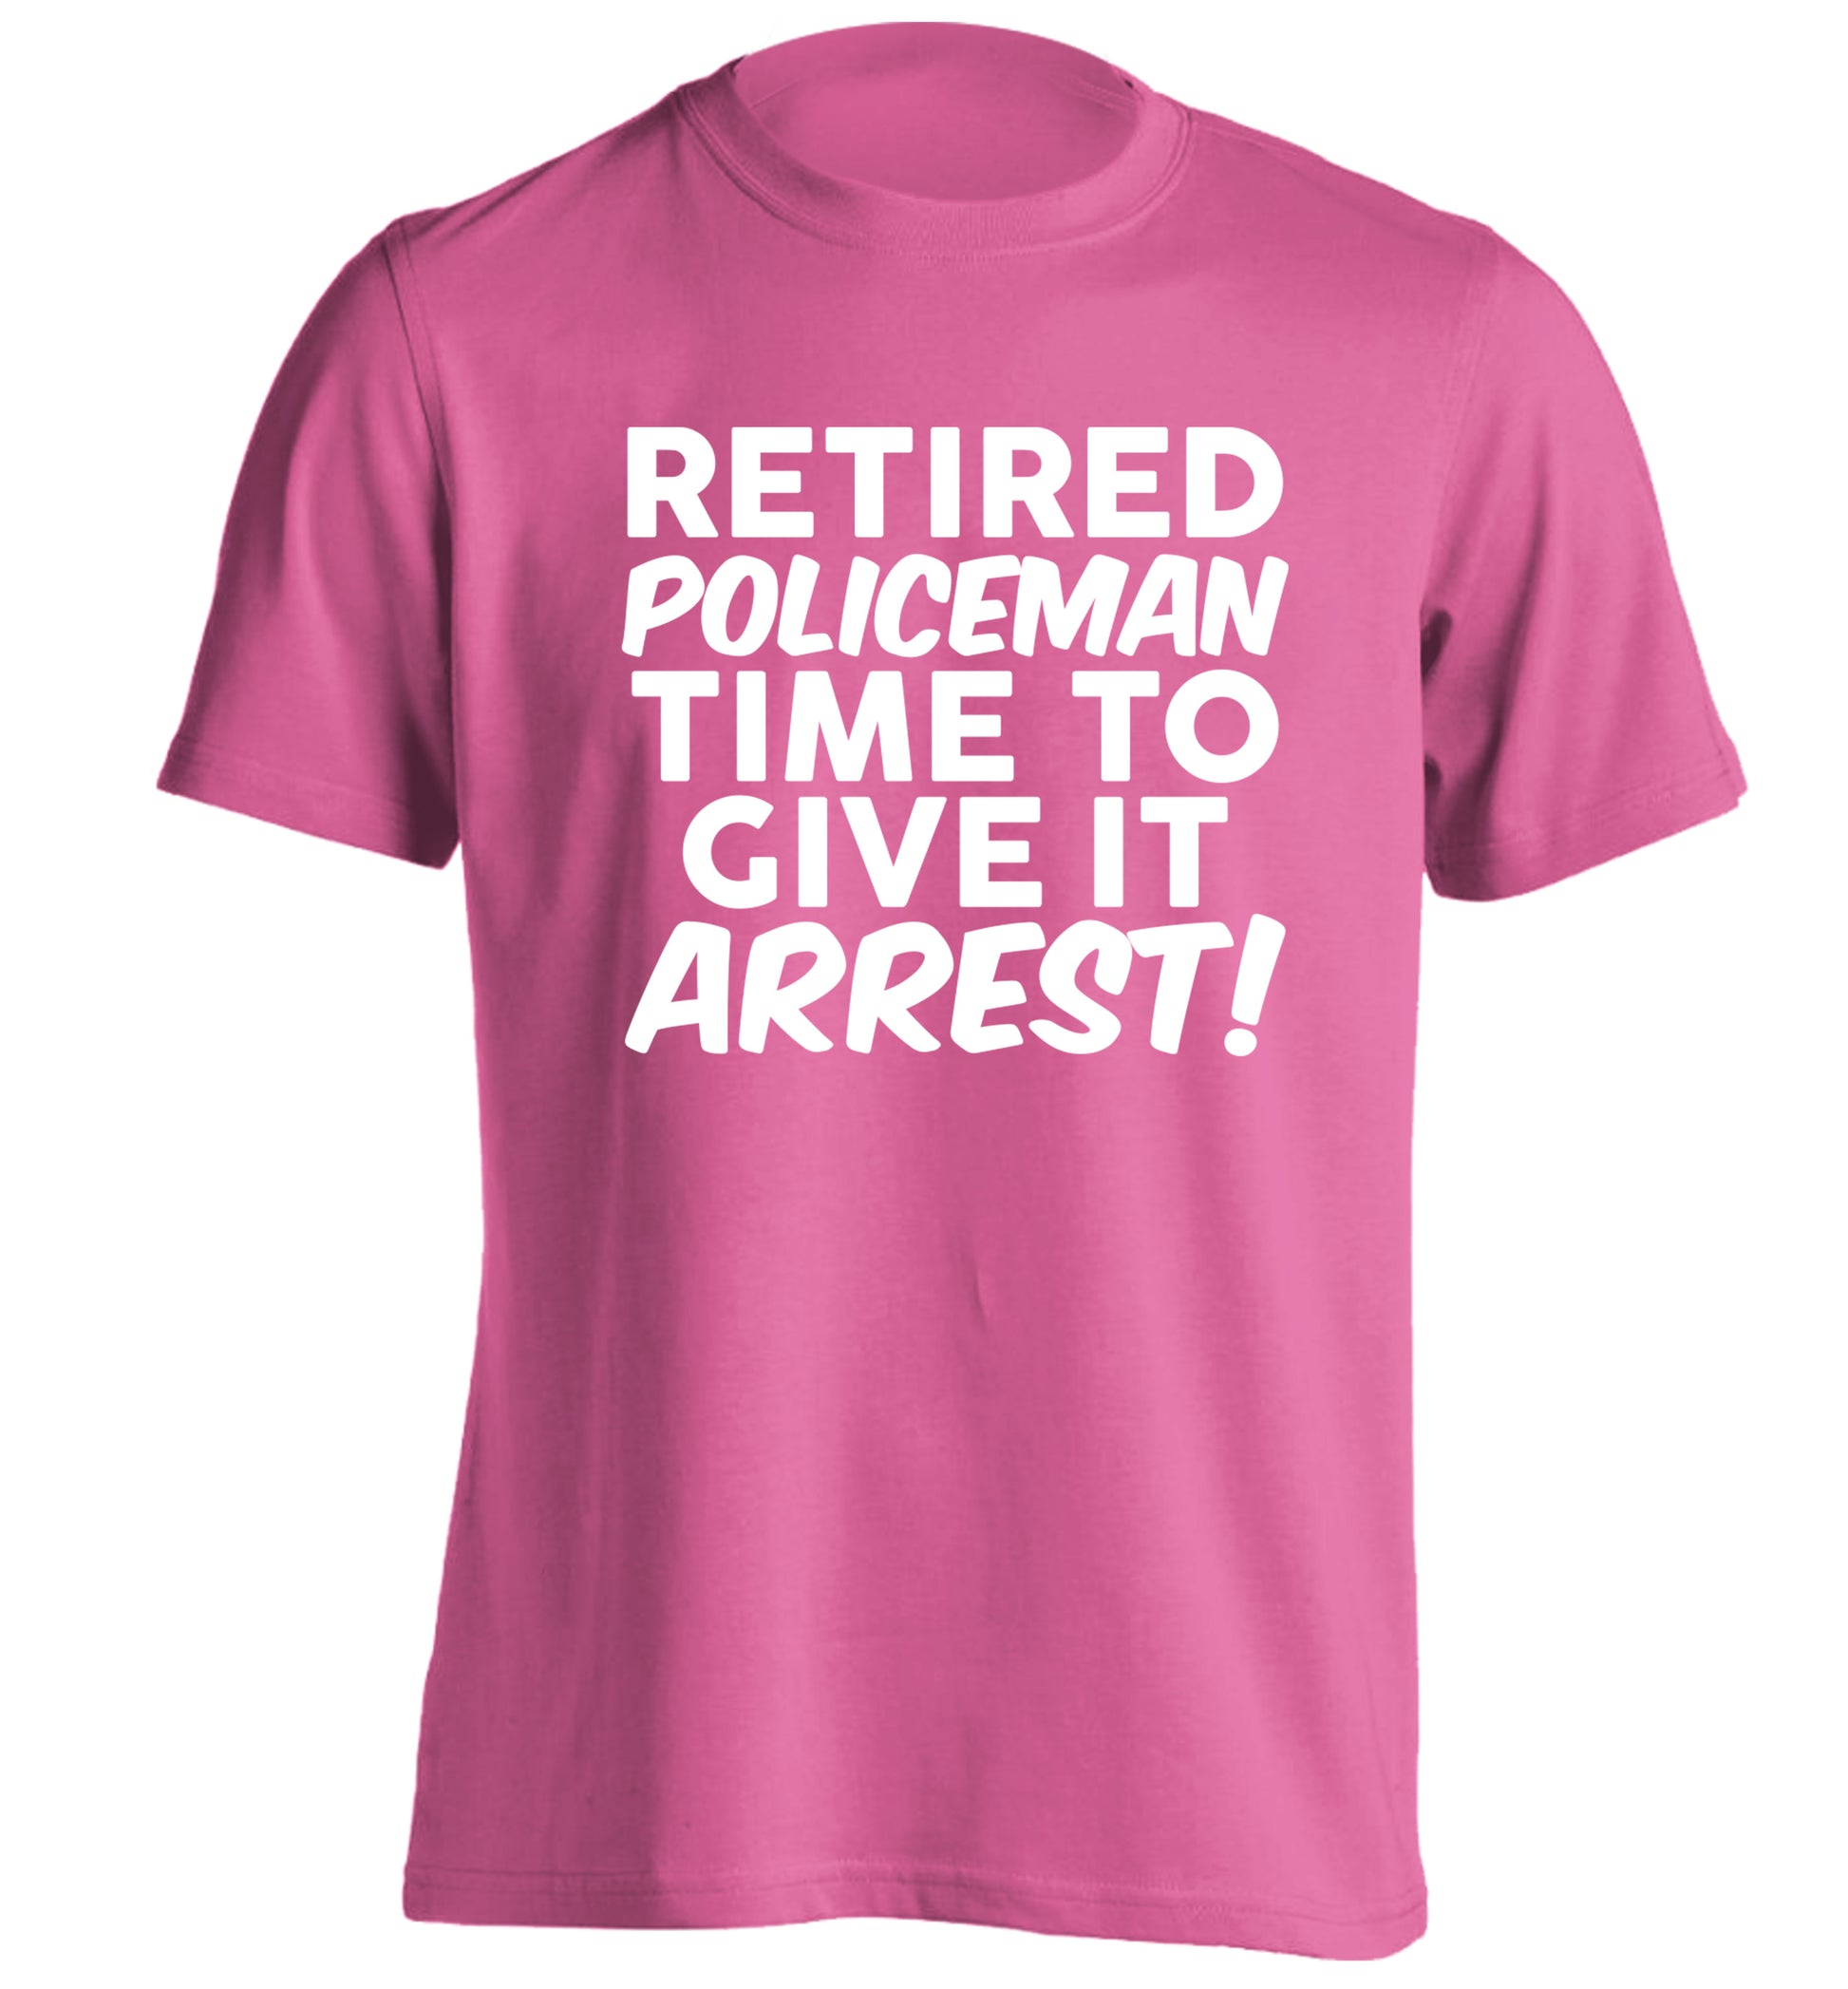 Retired policeman give it arresst! adults unisex pink Tshirt 2XL